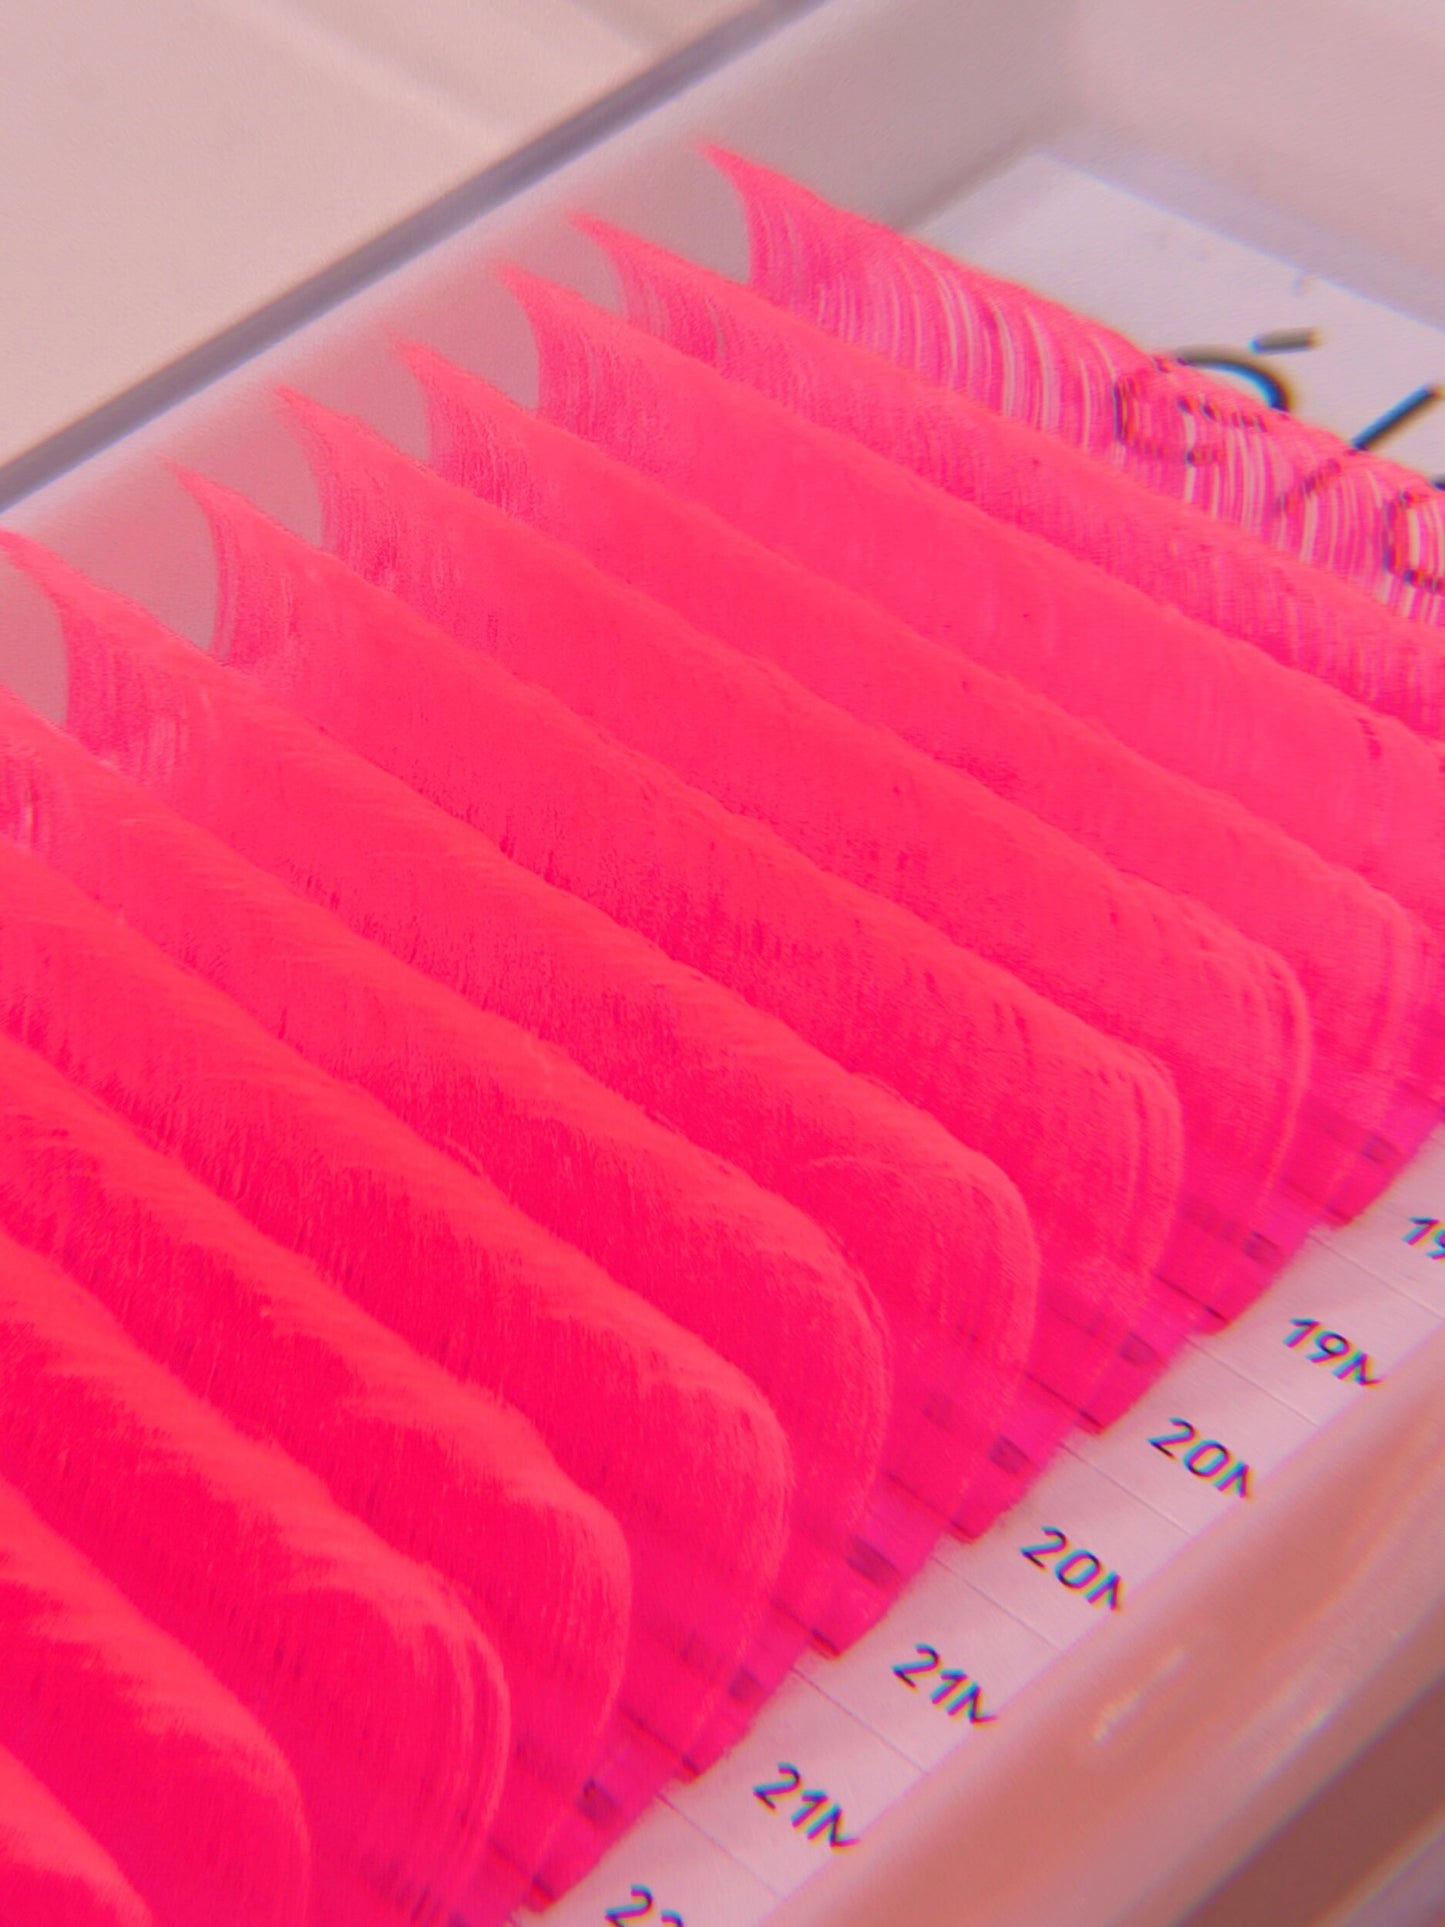 UV NEON 0.05 cashmere mink lashes